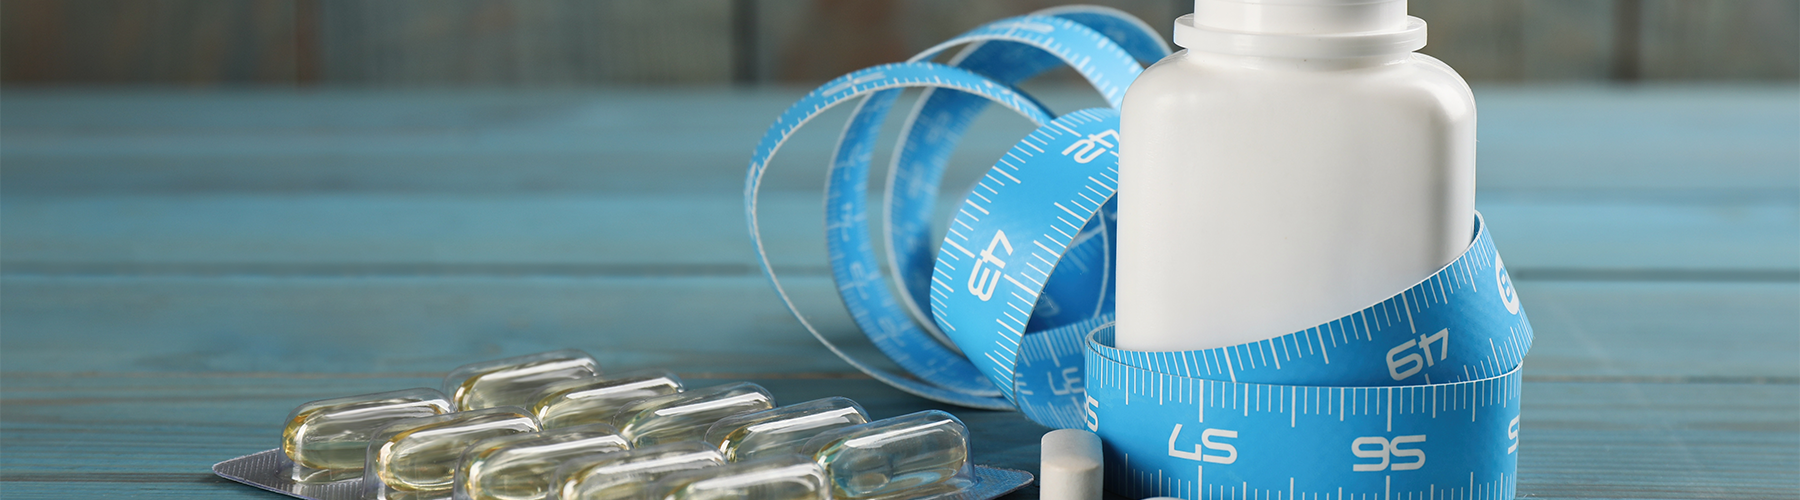 blue color scheme pills, measuring tape, and bottle